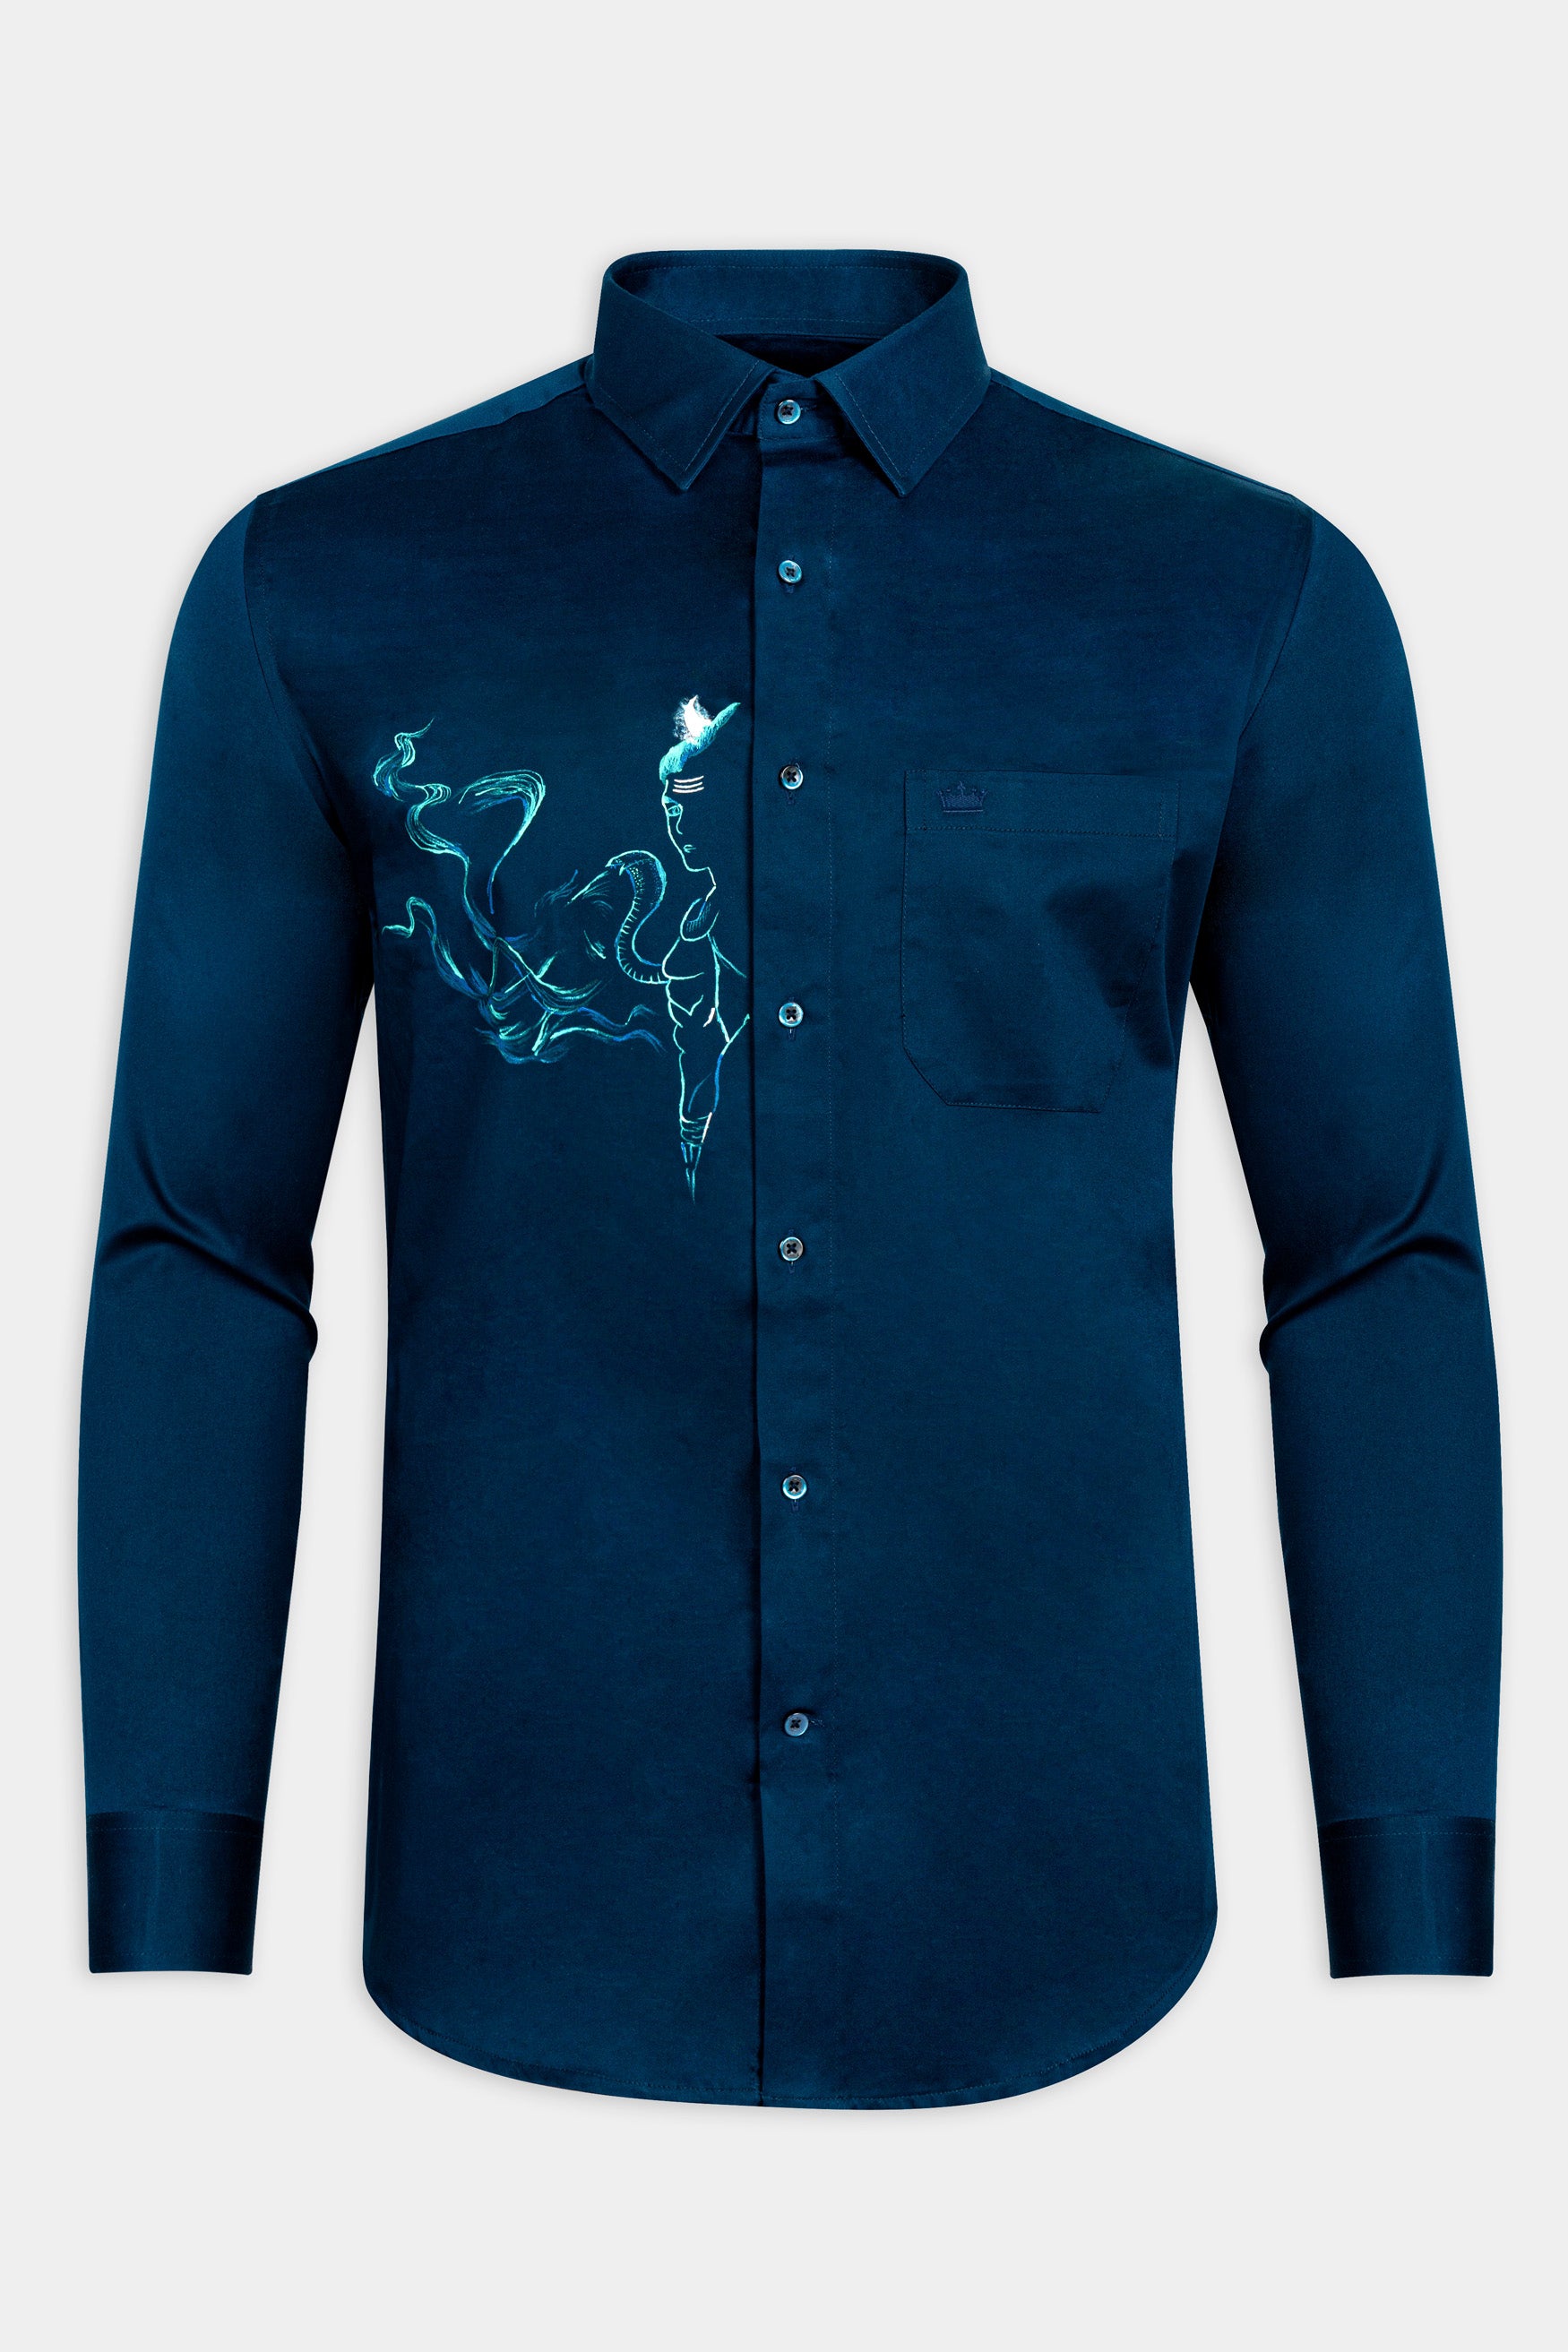 Midnight Blue Lord Shiva Hand Painted Subtle Sheen Super Soft Premium Cotton Designer Shirt